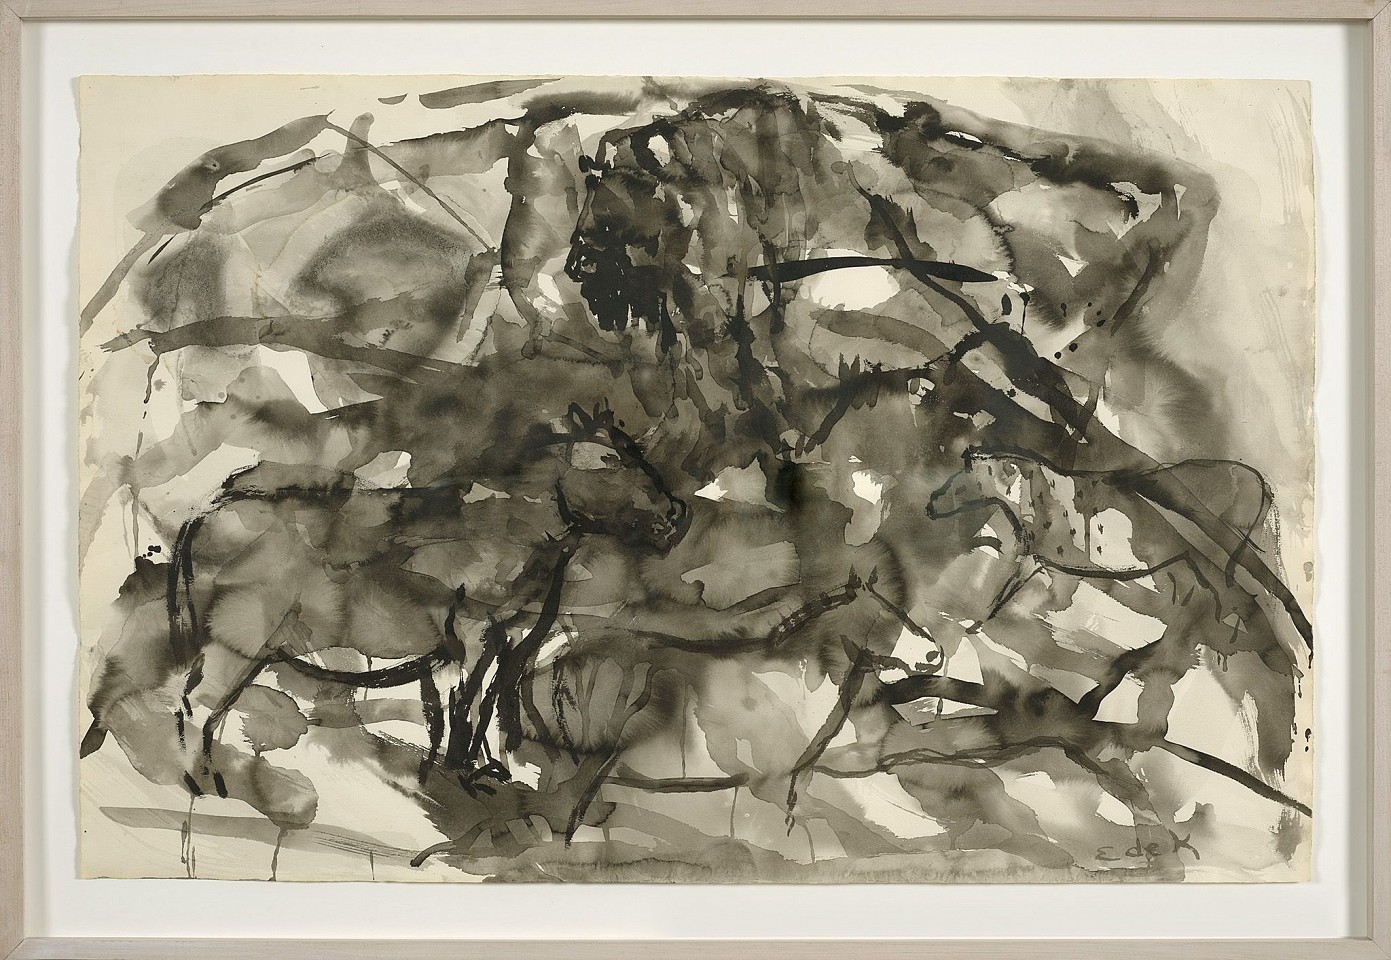 Elaine de Kooning, Pasture, Wan Fou Shan, 1988
Sumi ink on paper, 26 x 40 in. (66 x 101.6 cm)
EDEK-00028